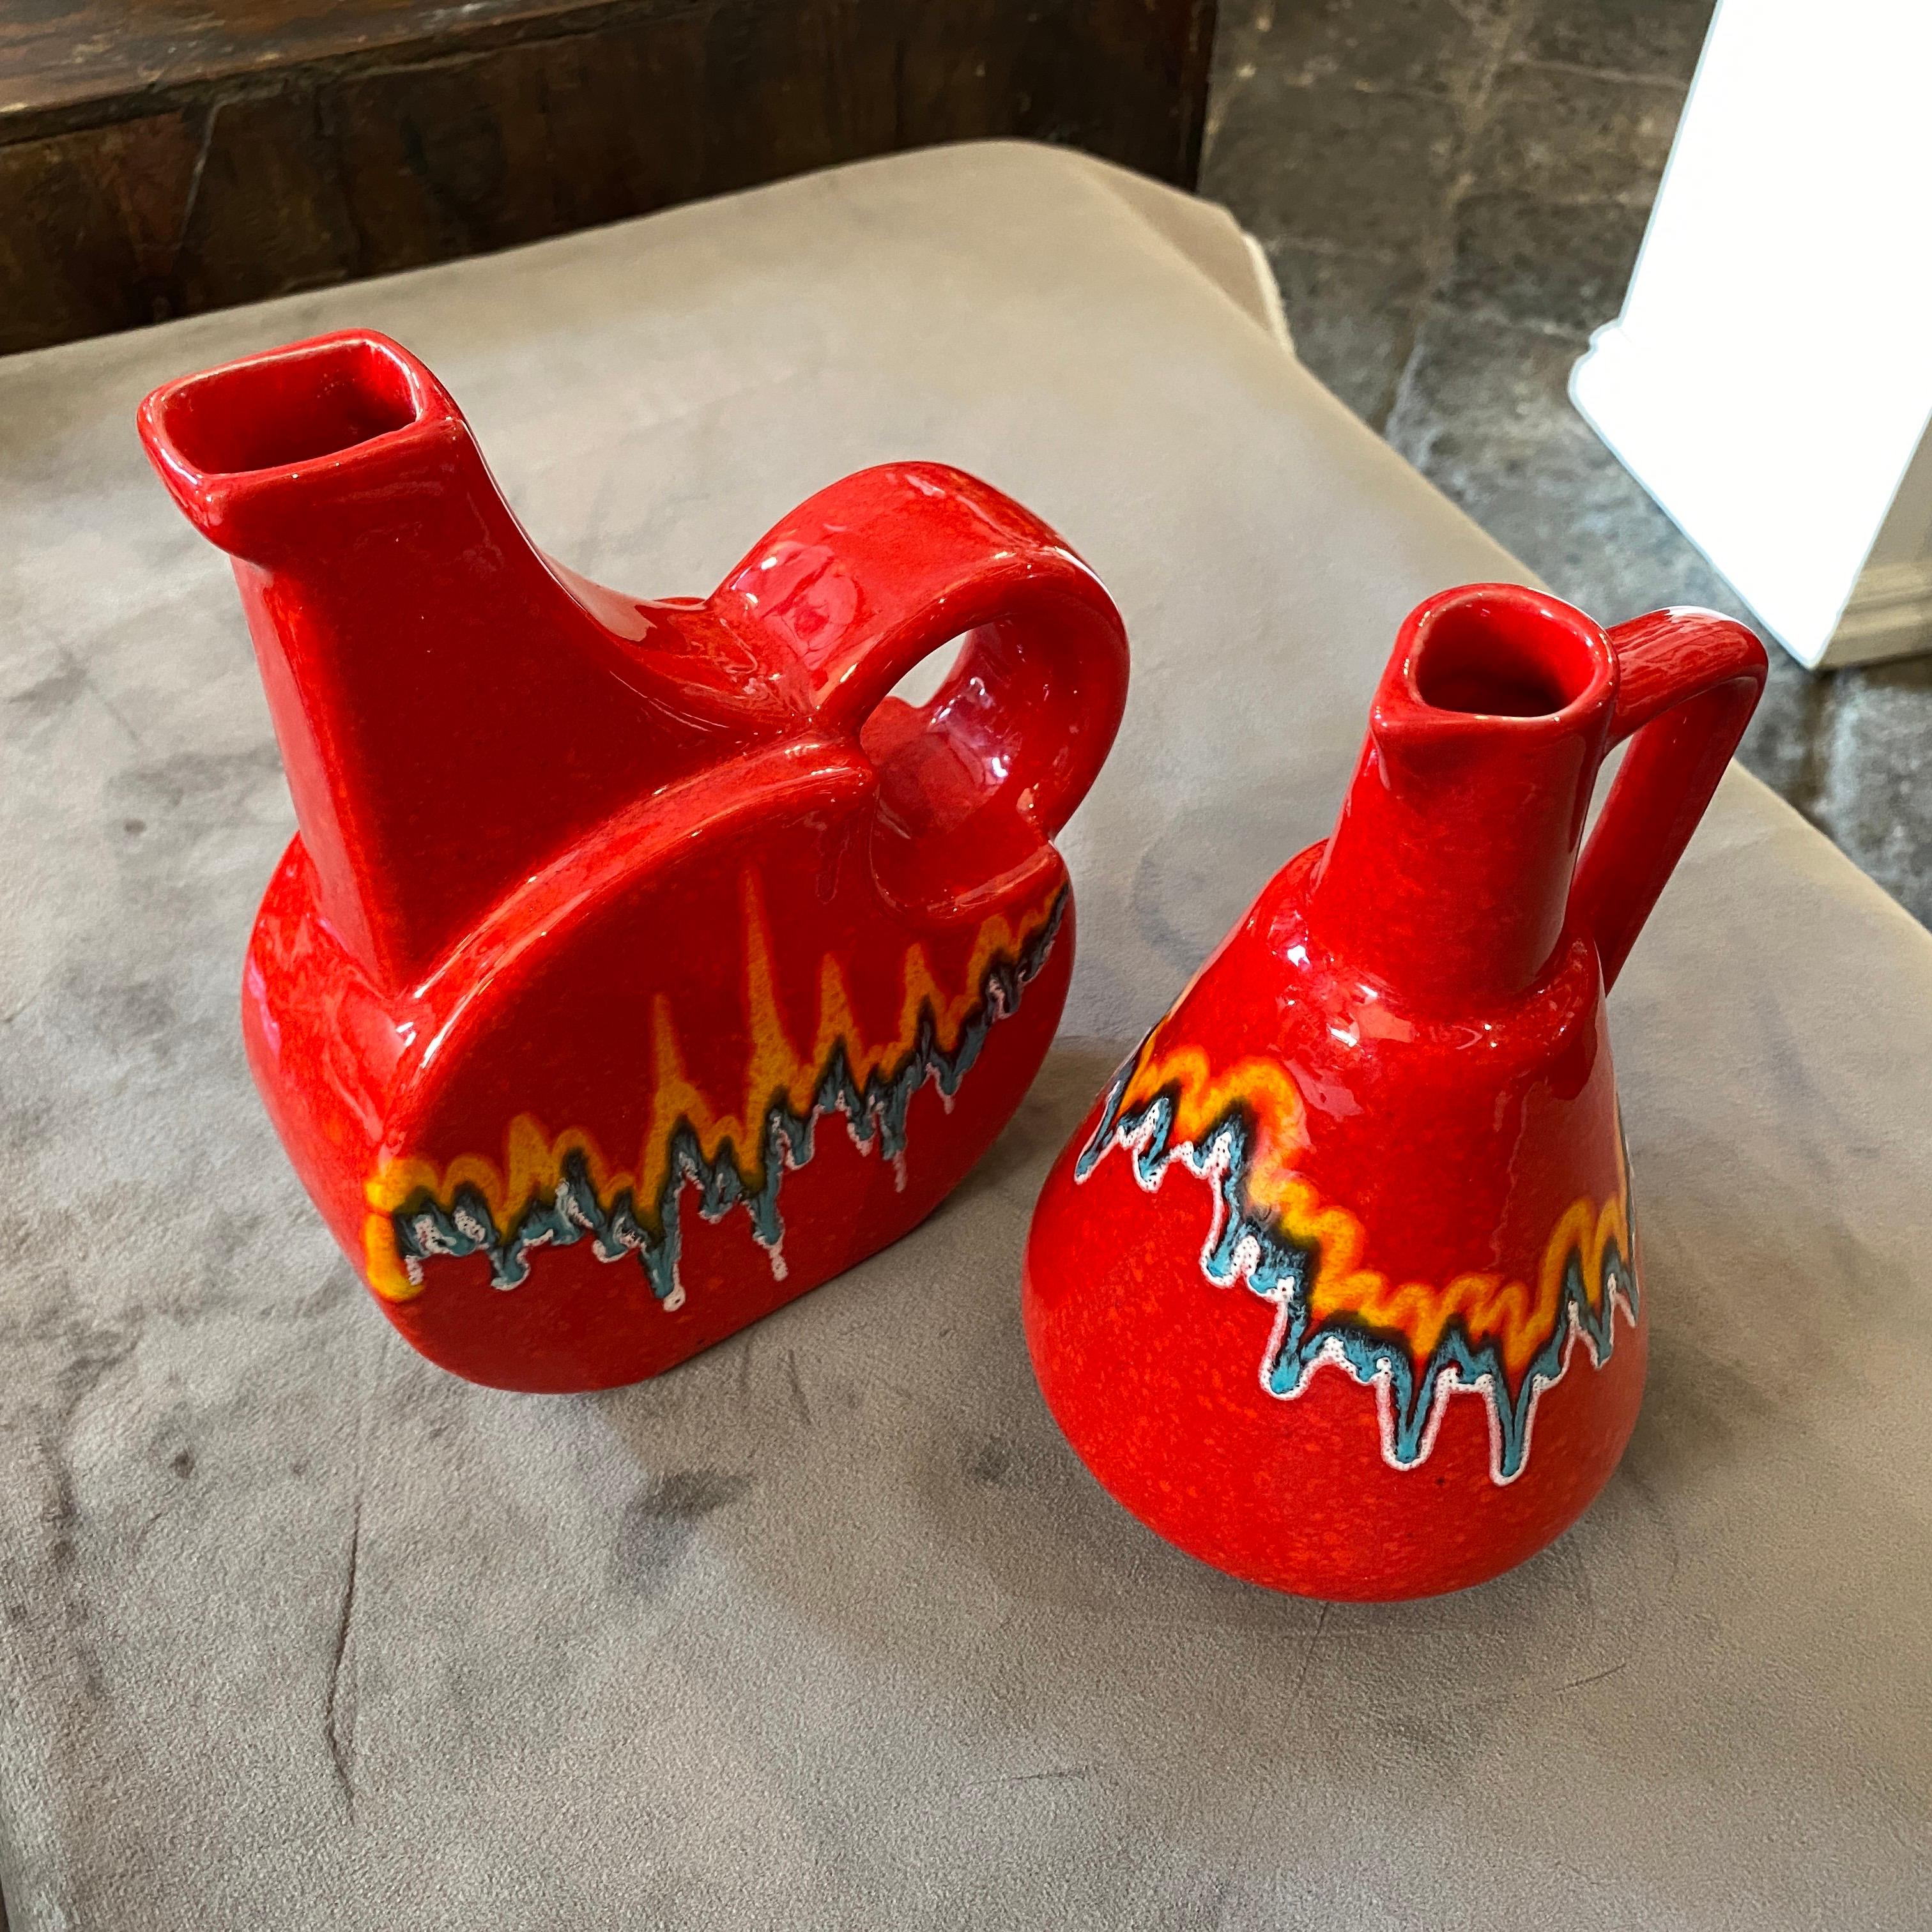 1980s Two Mid-Century Modern Red Ceramic Italian Jugs by Bertoncello 6